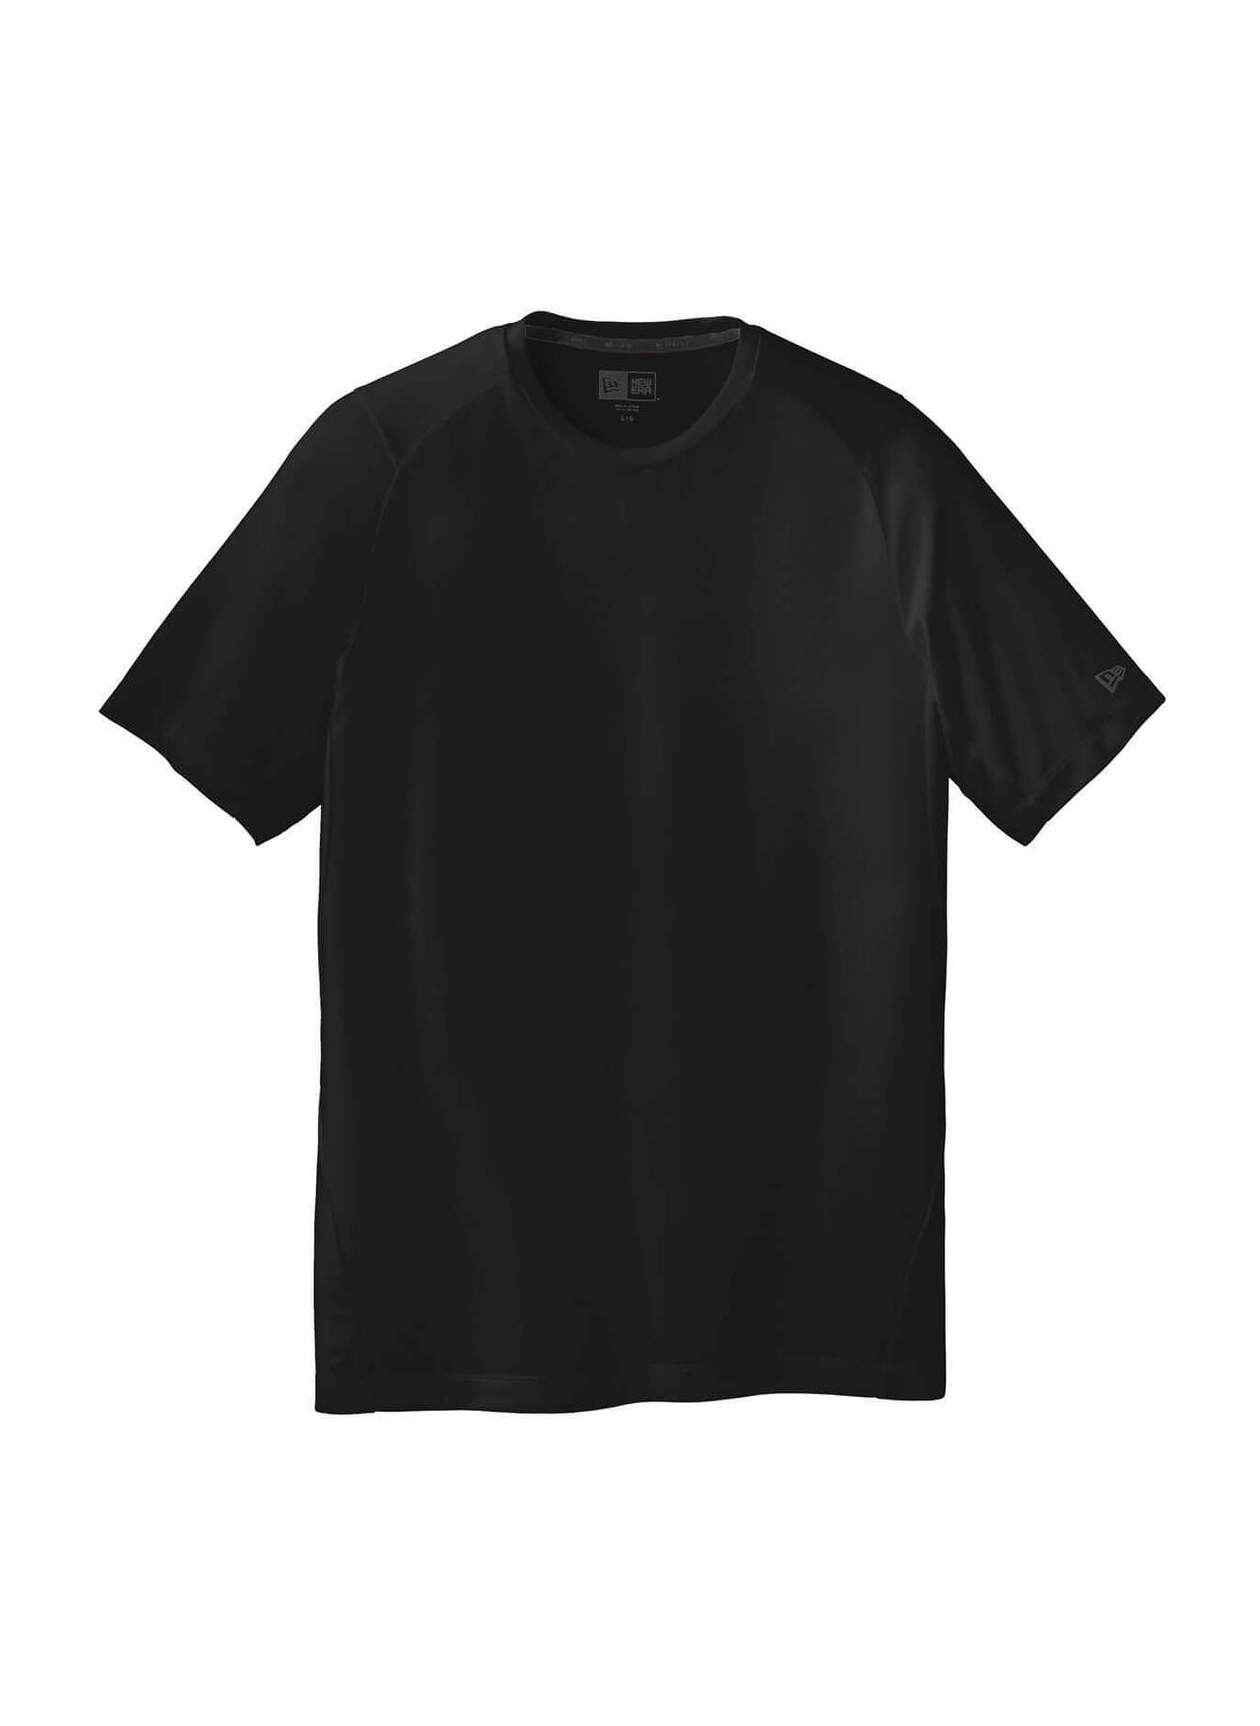 New Era Men's Black Series Performance Crew T-Shirt